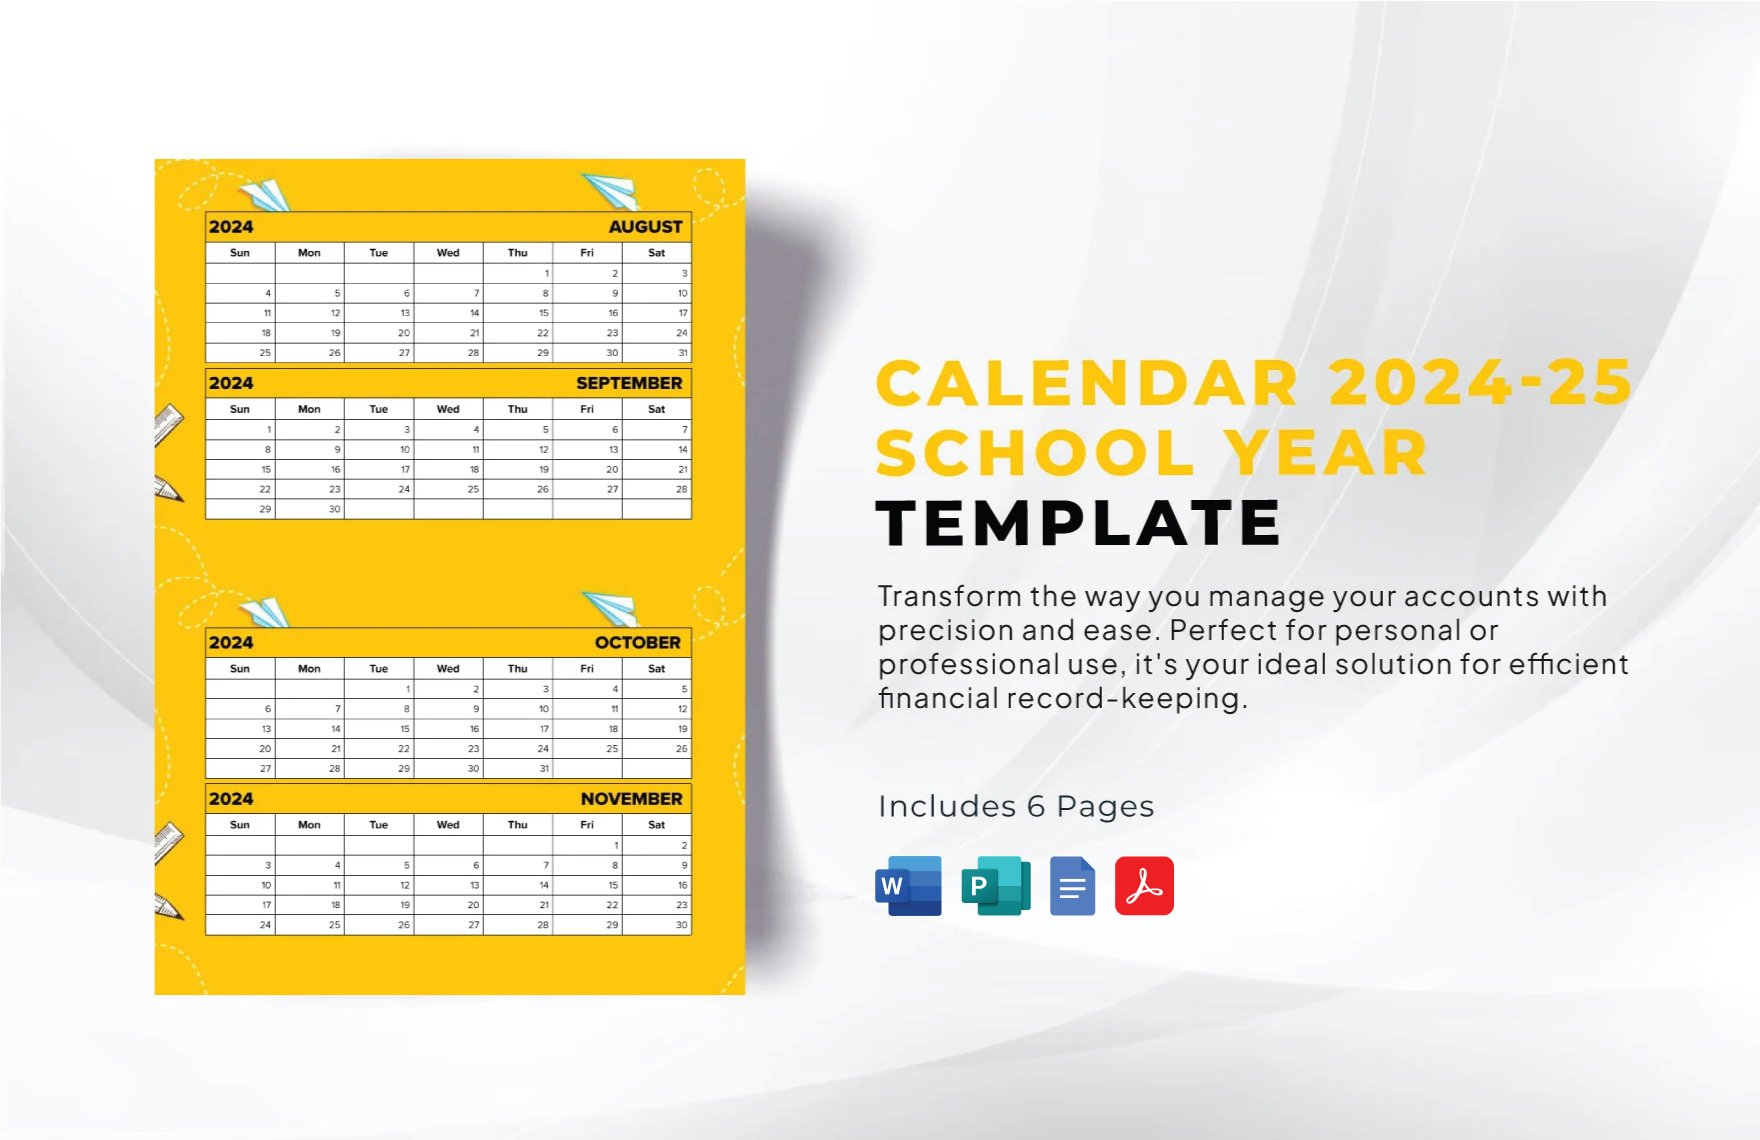 Calendar 2024-25 School Year Template